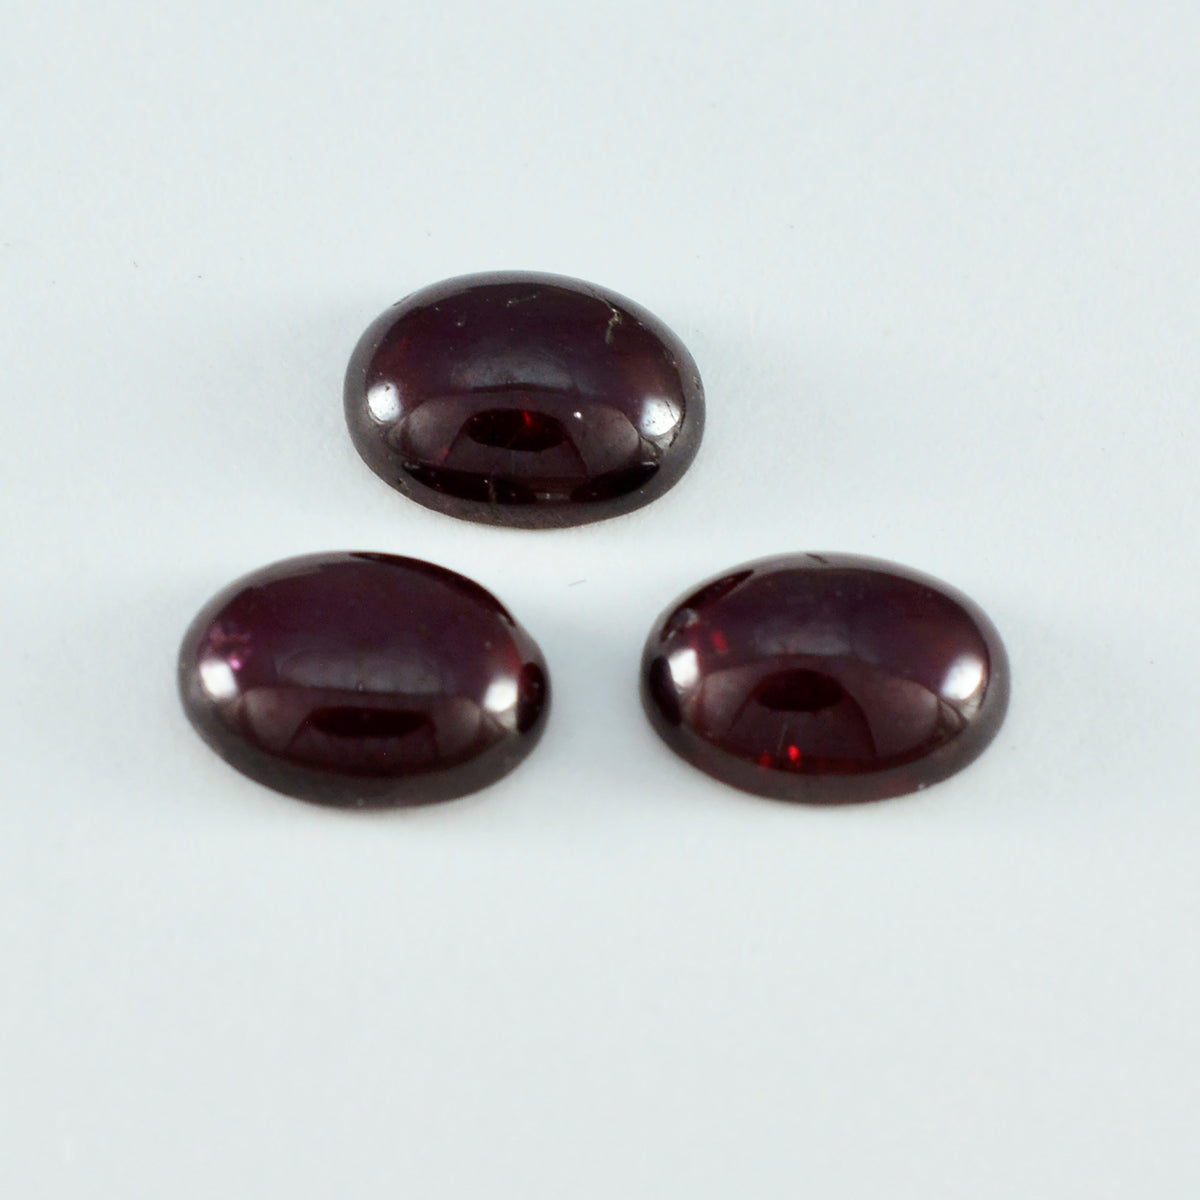 Riyogems 1PC Red Garnet Cabochon 10x12 mm Oval Shape pretty Quality Stone